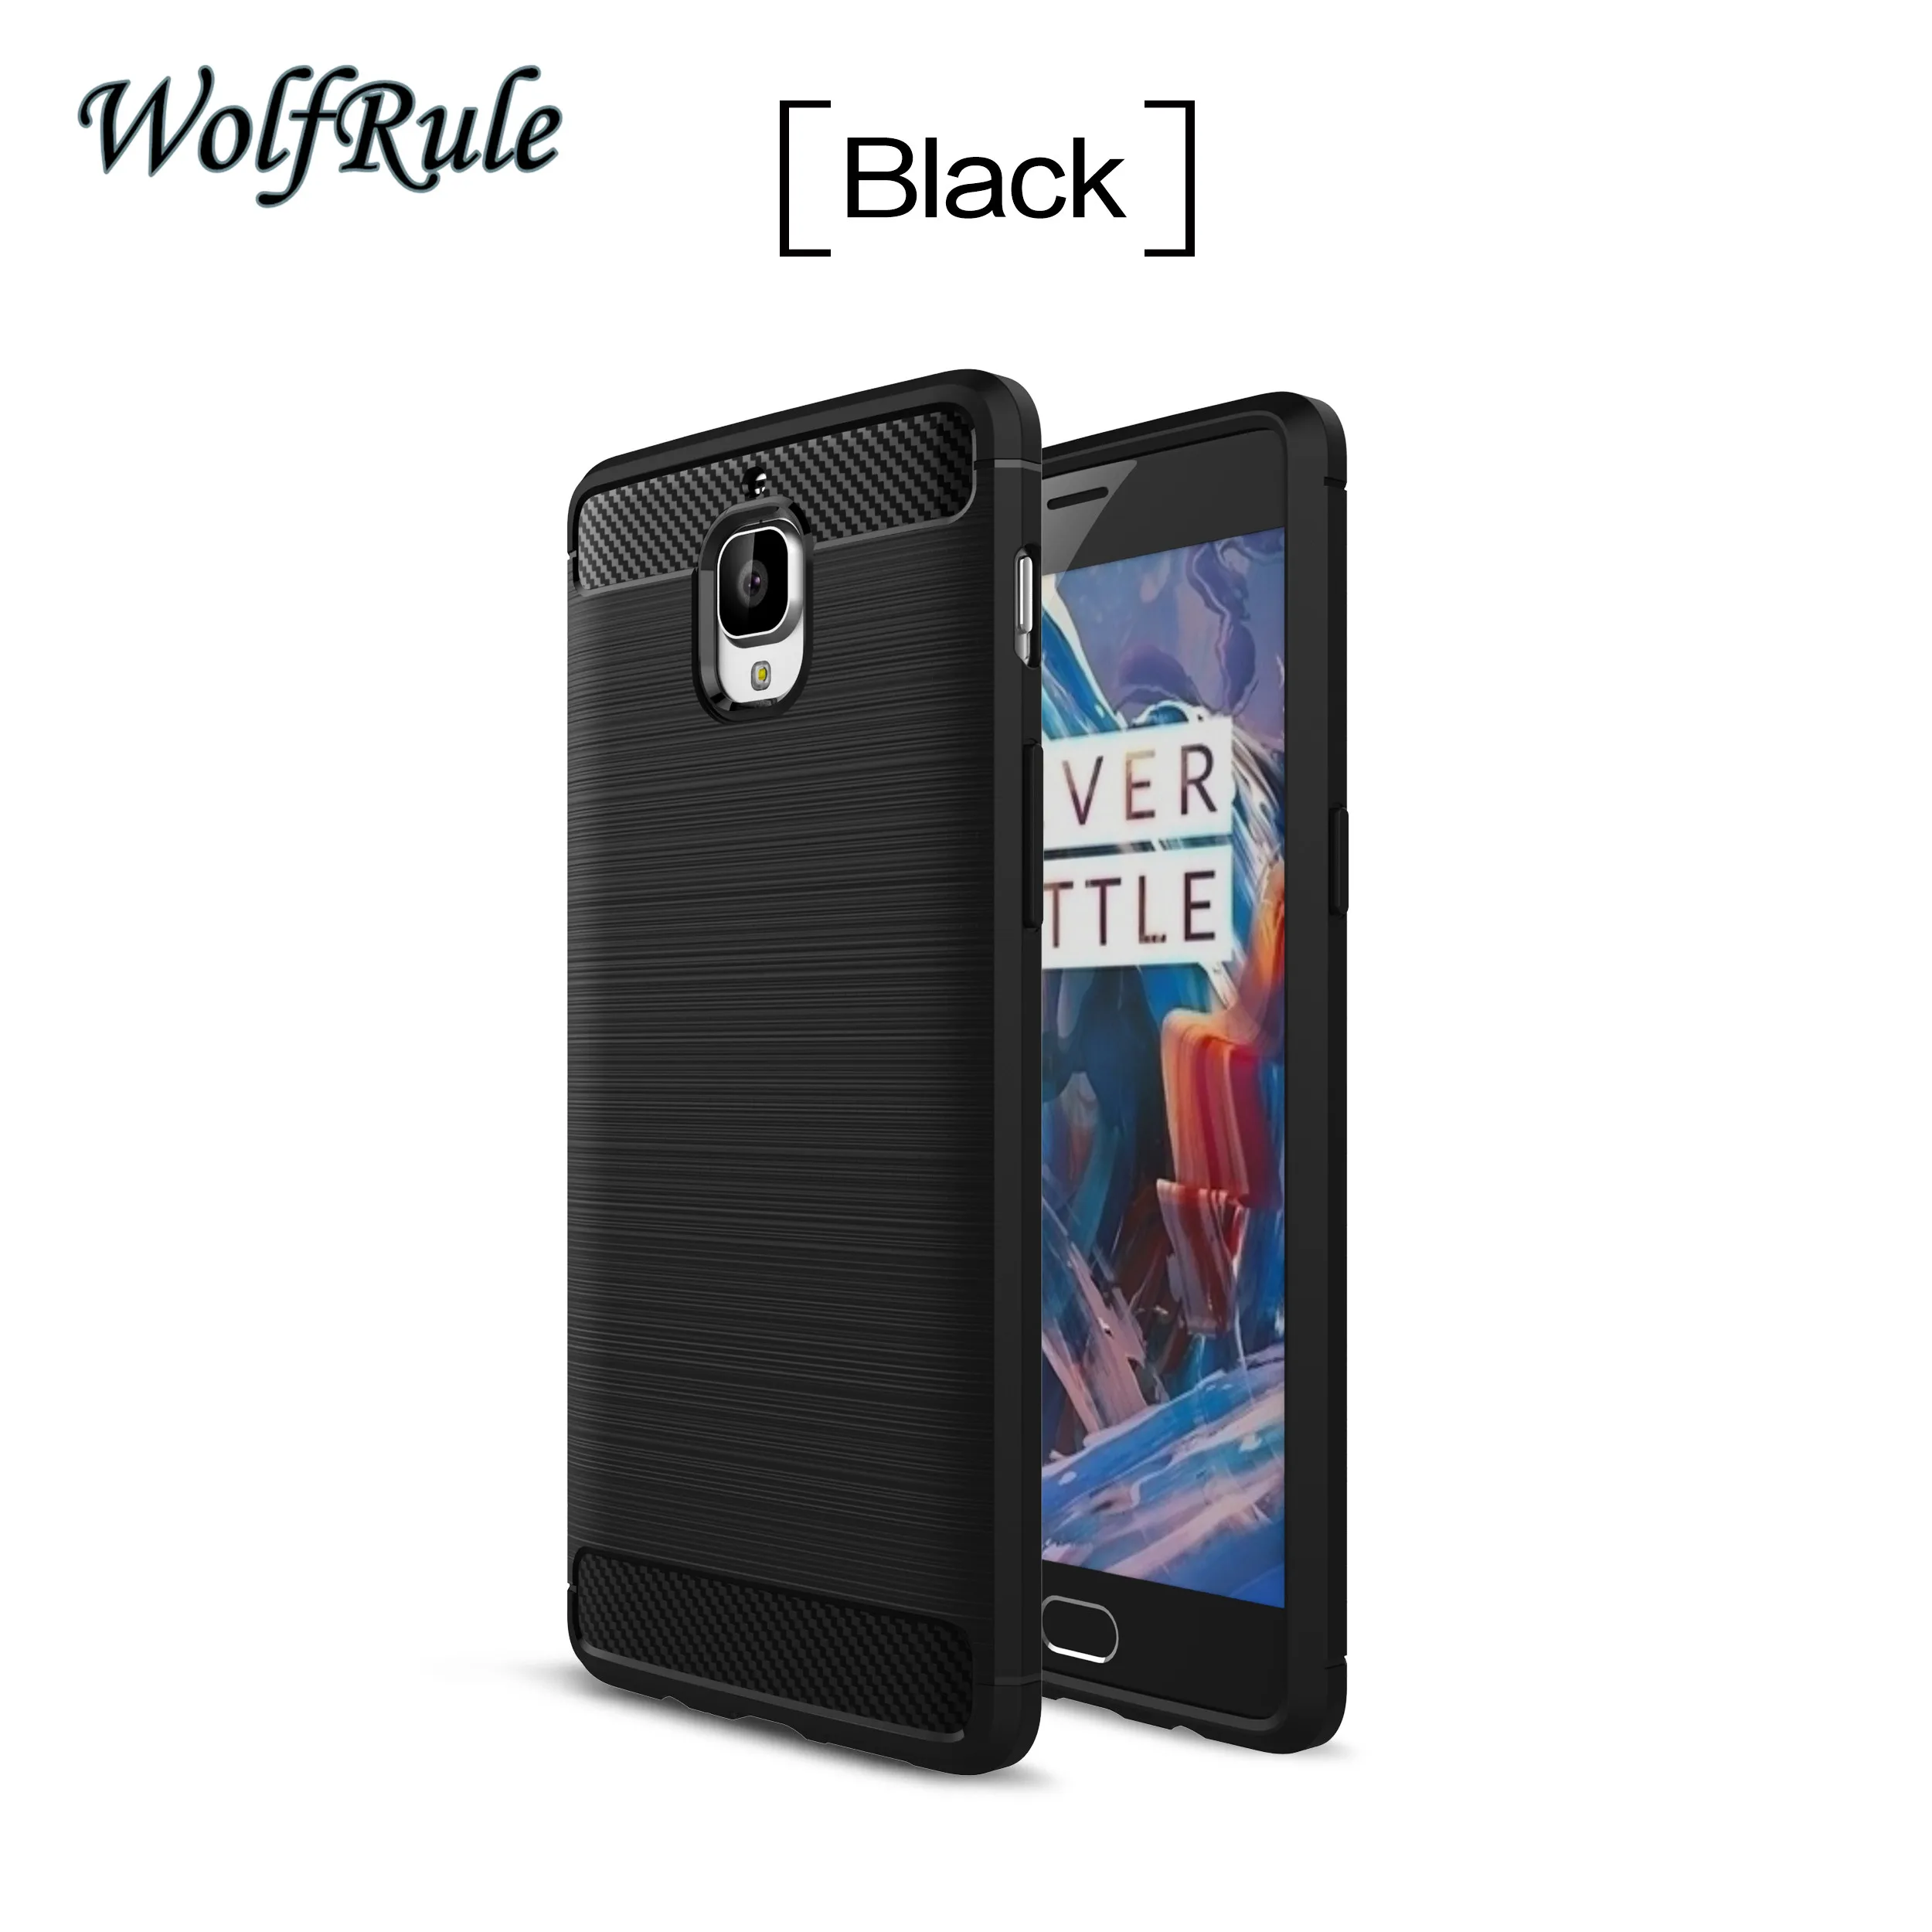 Чехол для OnePlus 3t, чехол для Oneplus 3, мягкий силиконовый чехол WolfRule, матовый Стильный чехол для Oneplus 3t, чехол One plus 3 Three, чехол для телефона - Цвет: Black